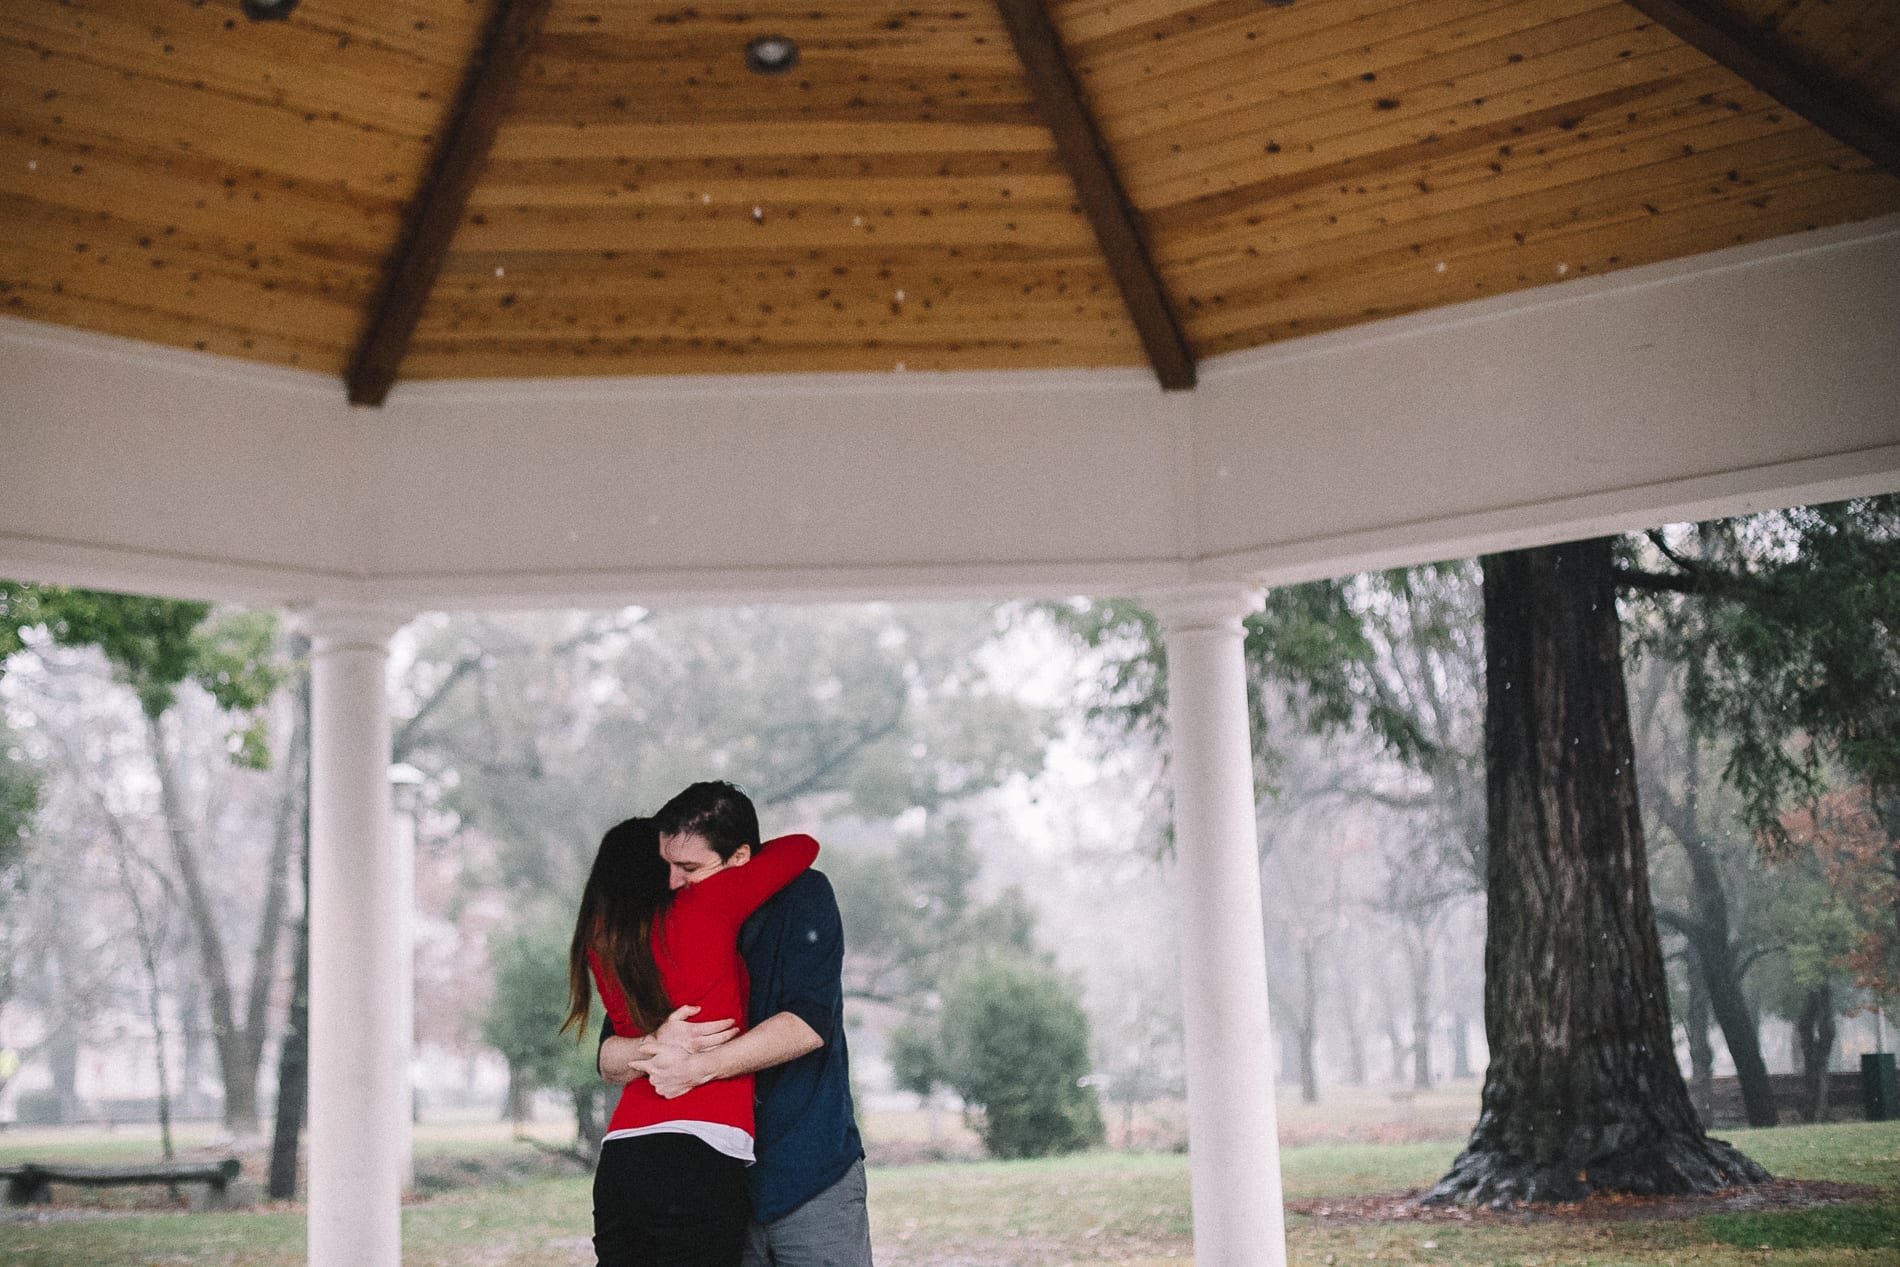 redding-caldwell-lake-park-gazebo-couples-photo-1